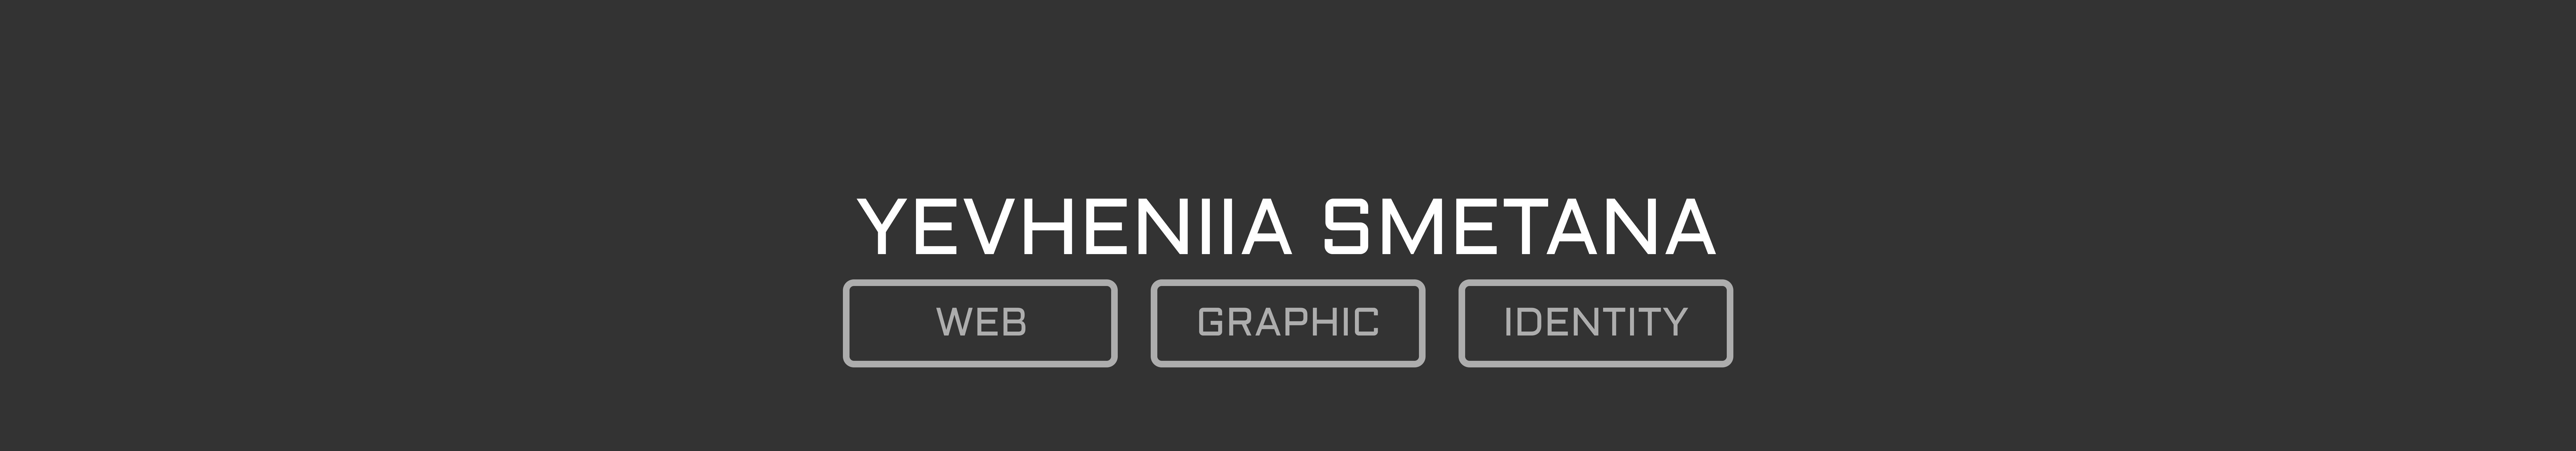 Yevheniia Smetanas profilbanner